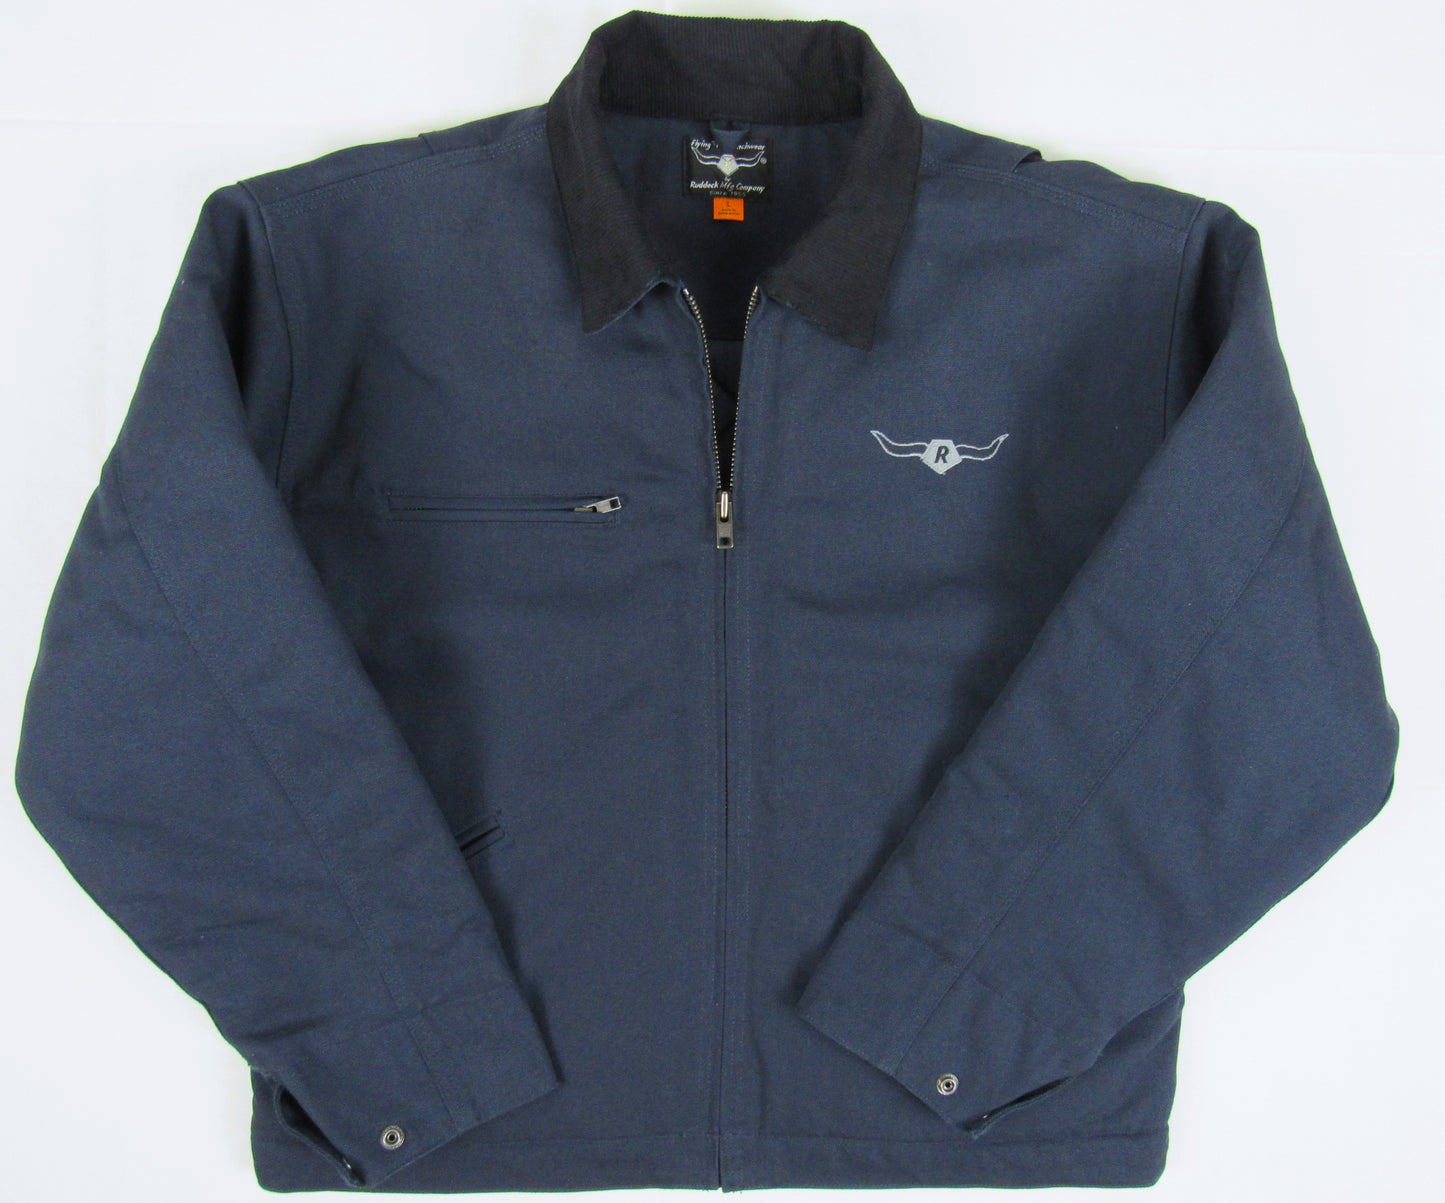 prairie canvas jacket by Flying R Ranchwear in navy blue